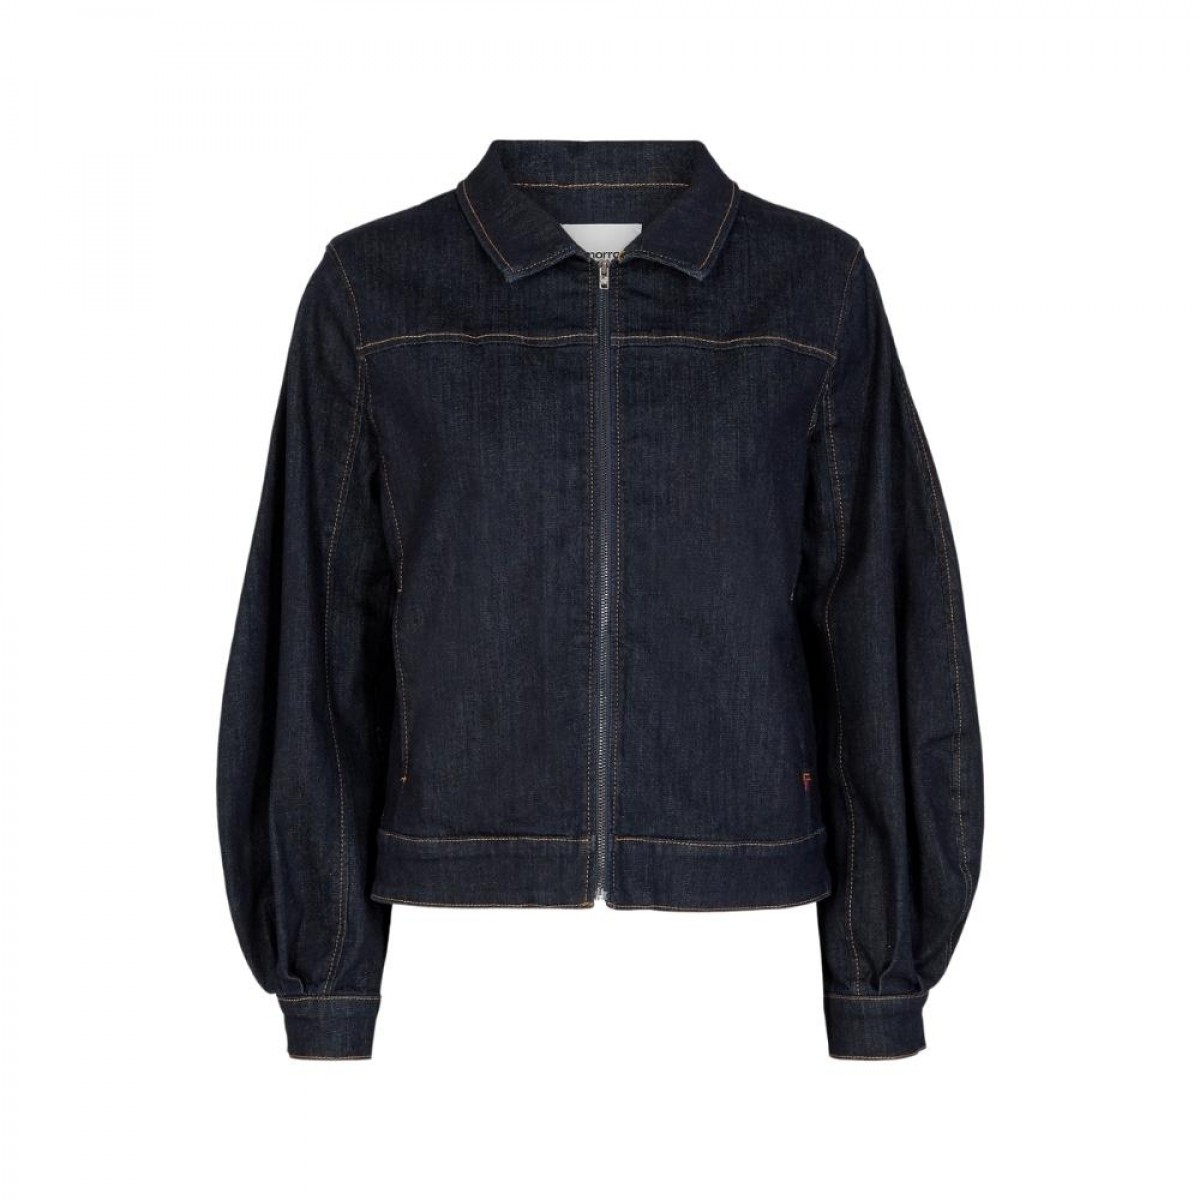 greta zip jacket - denim blue - front